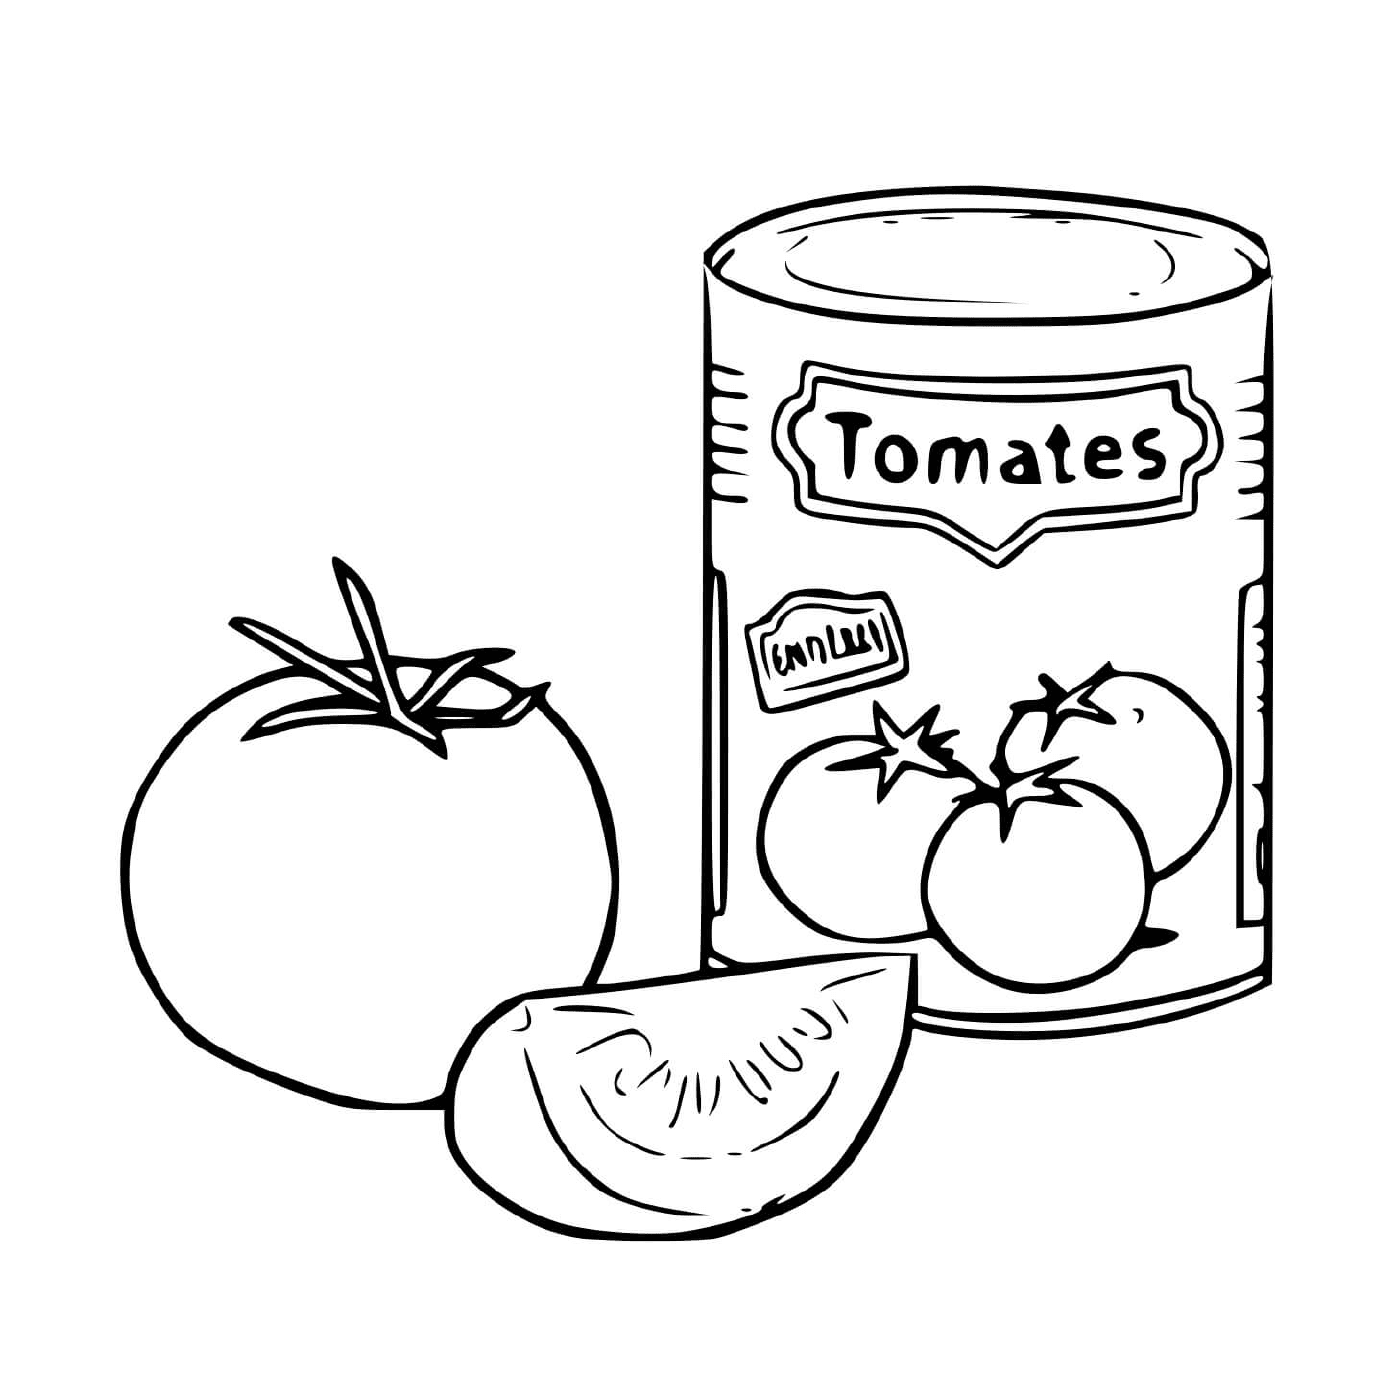  Tomate de cana esmagada 